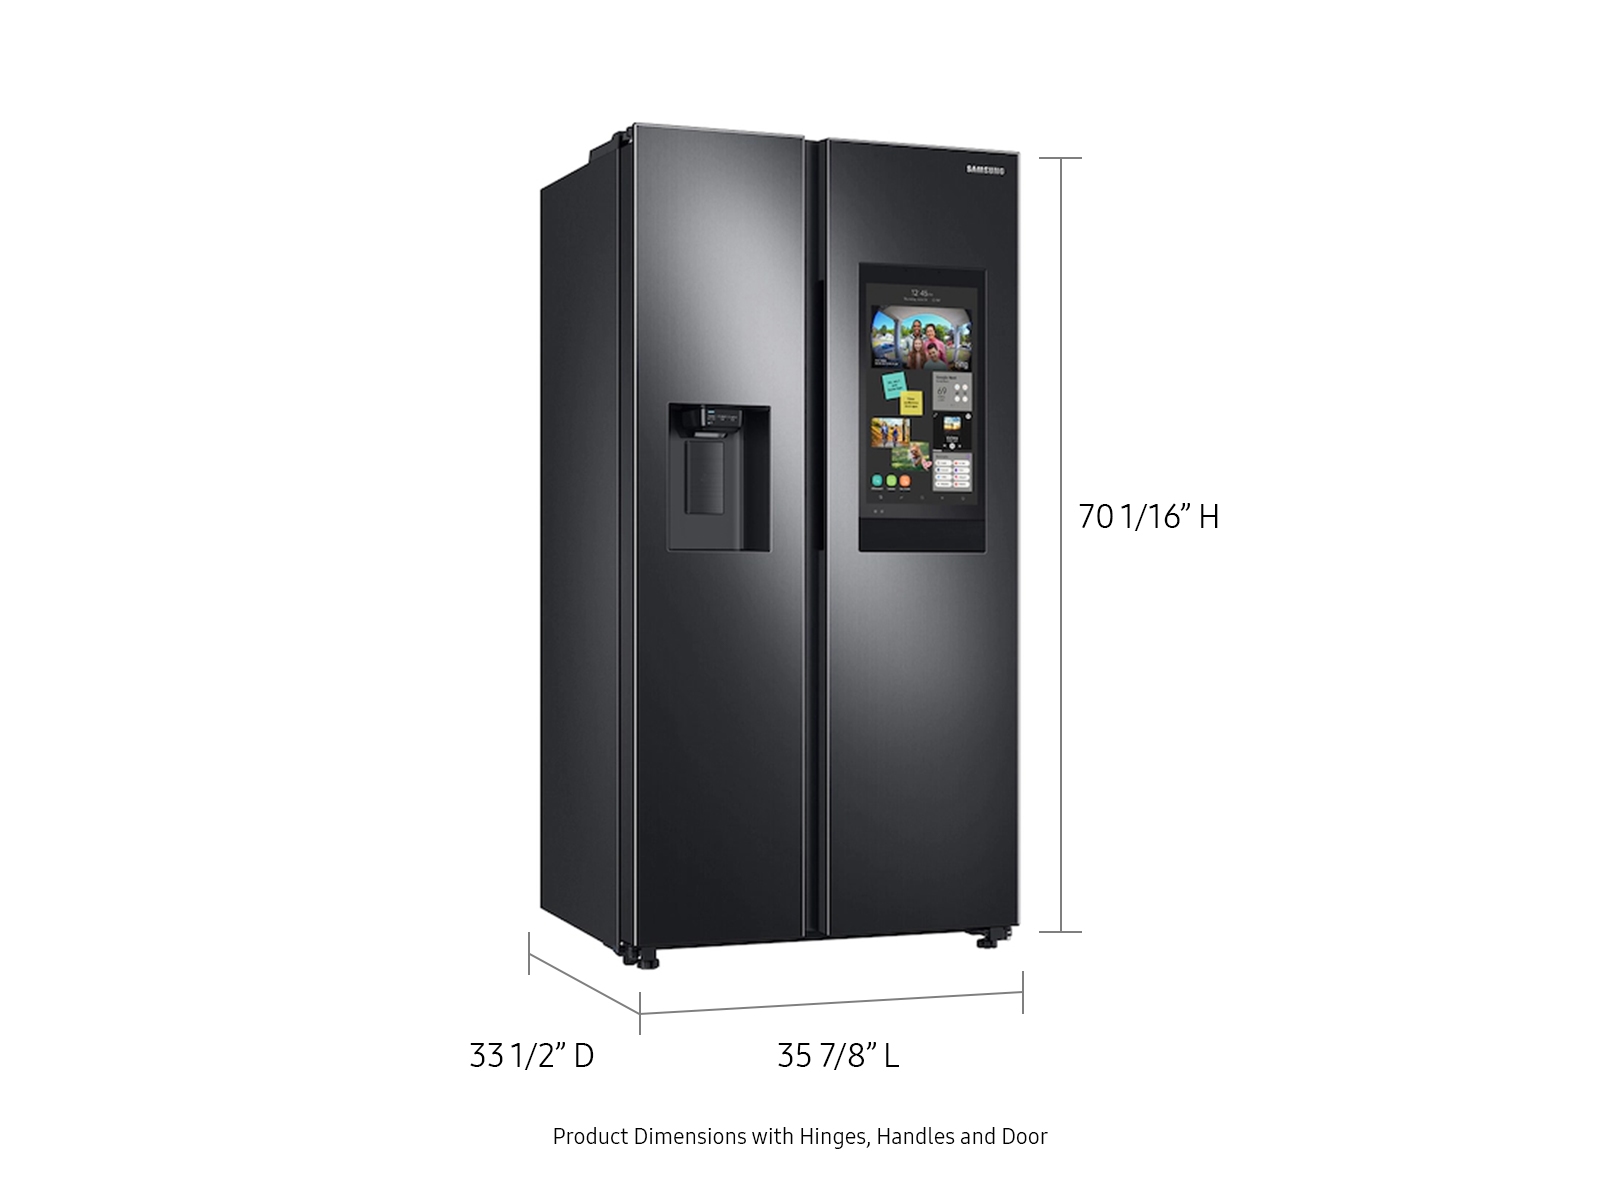 https://image-us.samsung.com/SamsungUS/home/home-appliances/refrigerators/pdp/10132021/Refrigerator_RS27T5561SG-AA_70-1-16x35-7-8x33-1-2.jpg?$product-details-jpg$